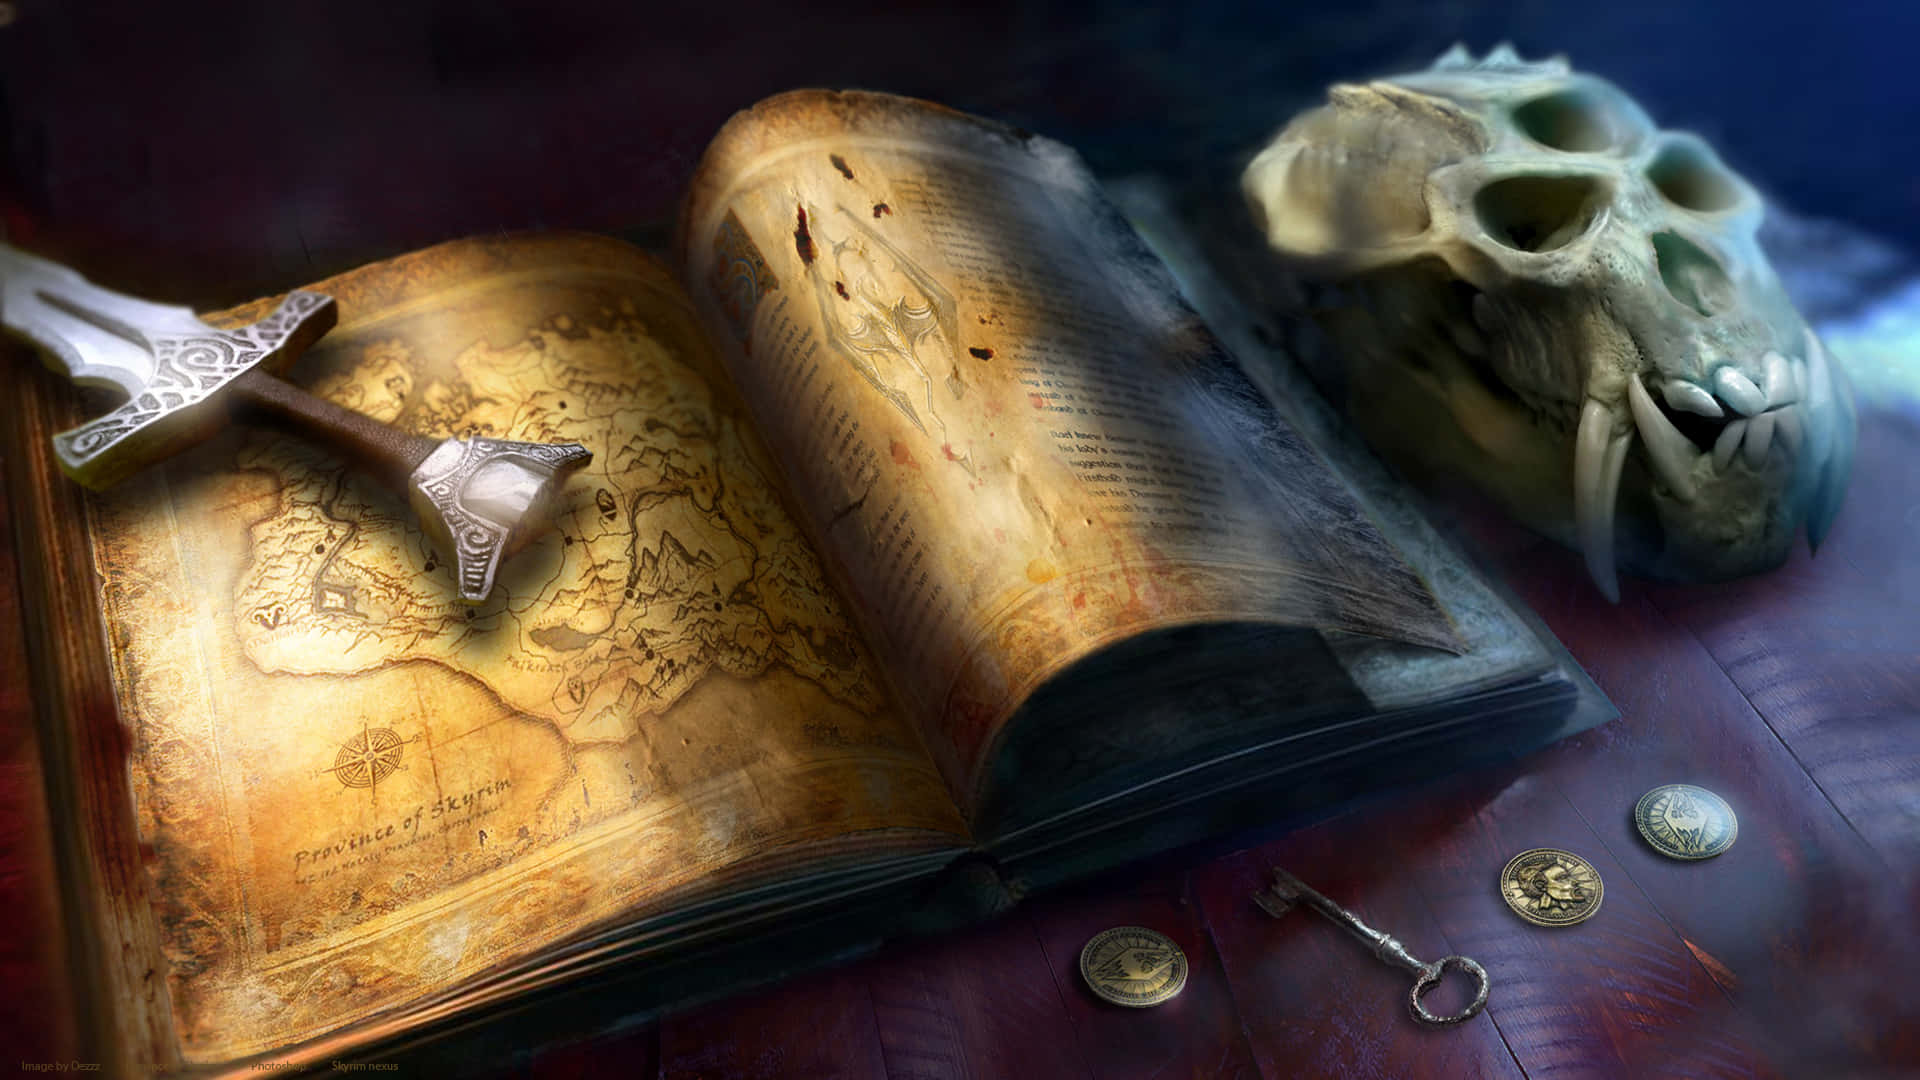 Best Skyrim Map, Coins, And Skull Wallpaper